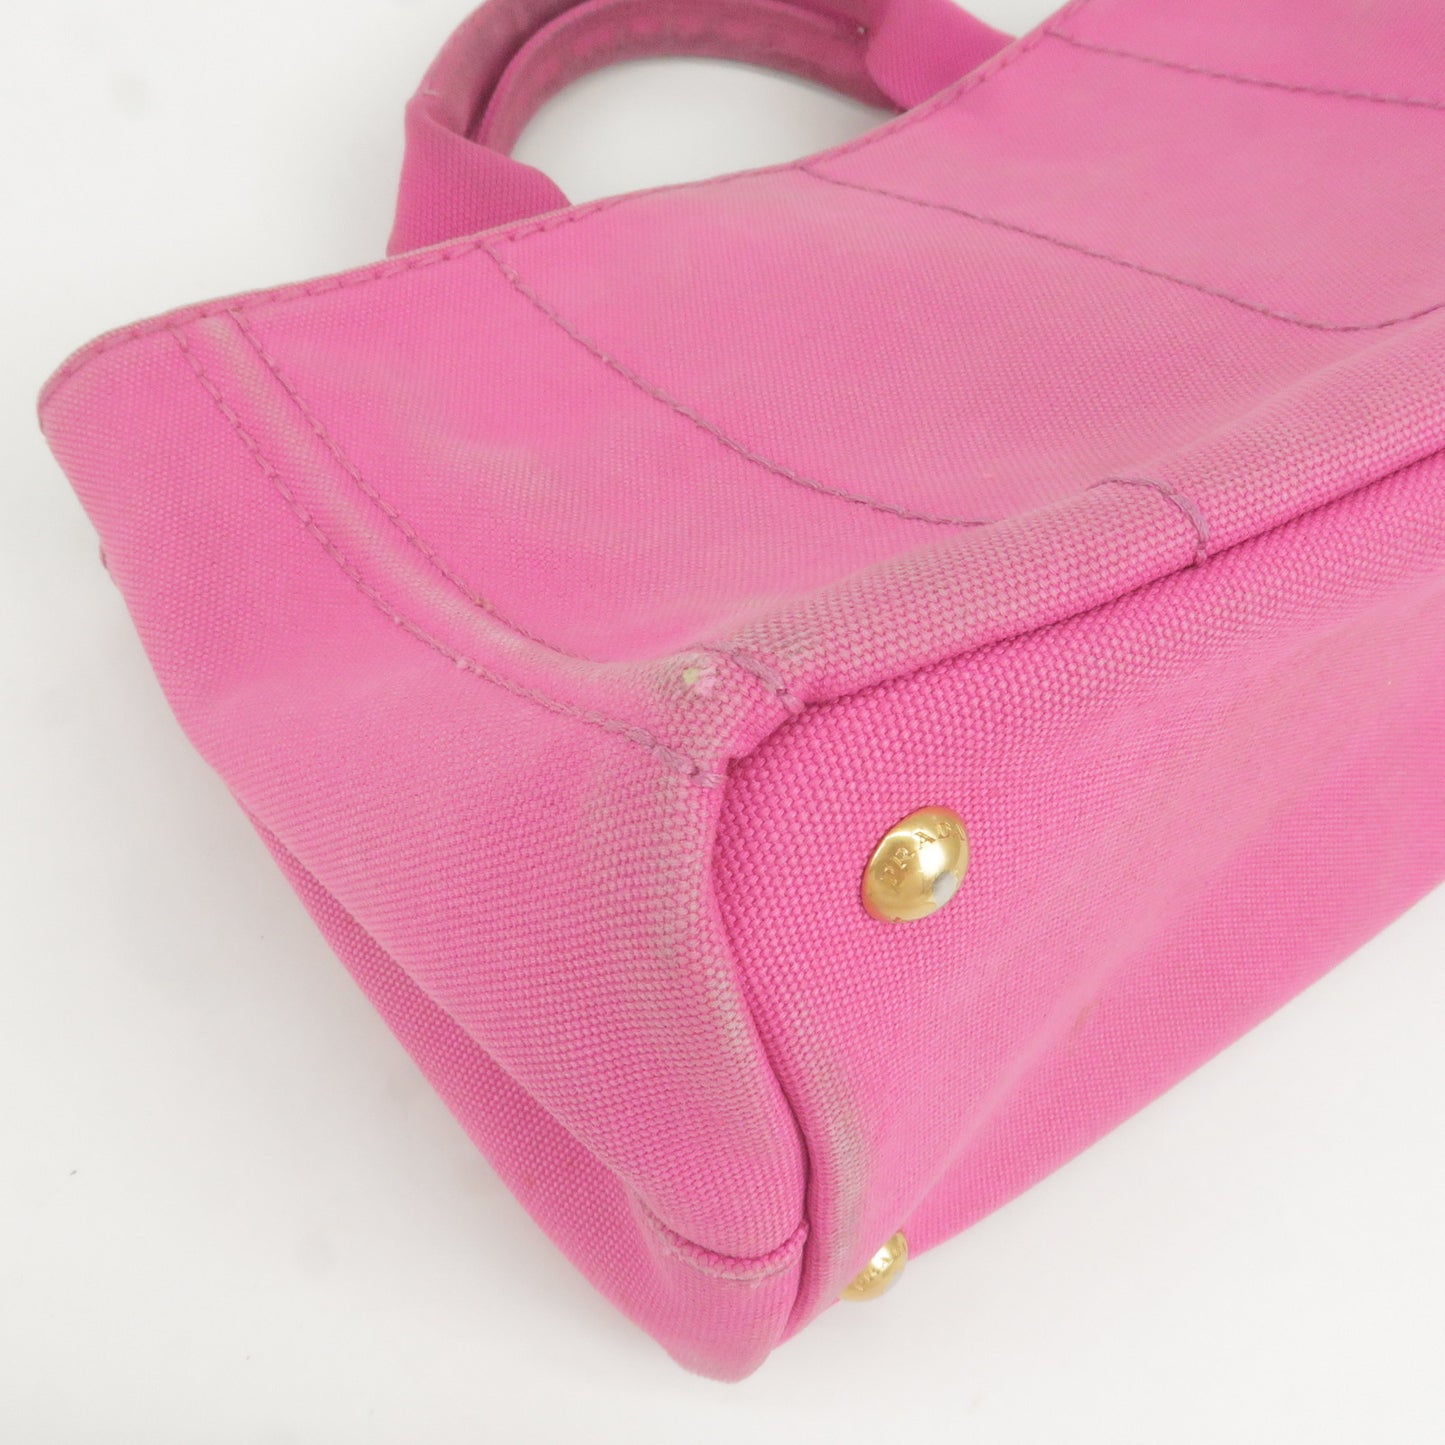 PRADA Logo Canapa Mini Canvas Hand Bag Tote Bag Pink